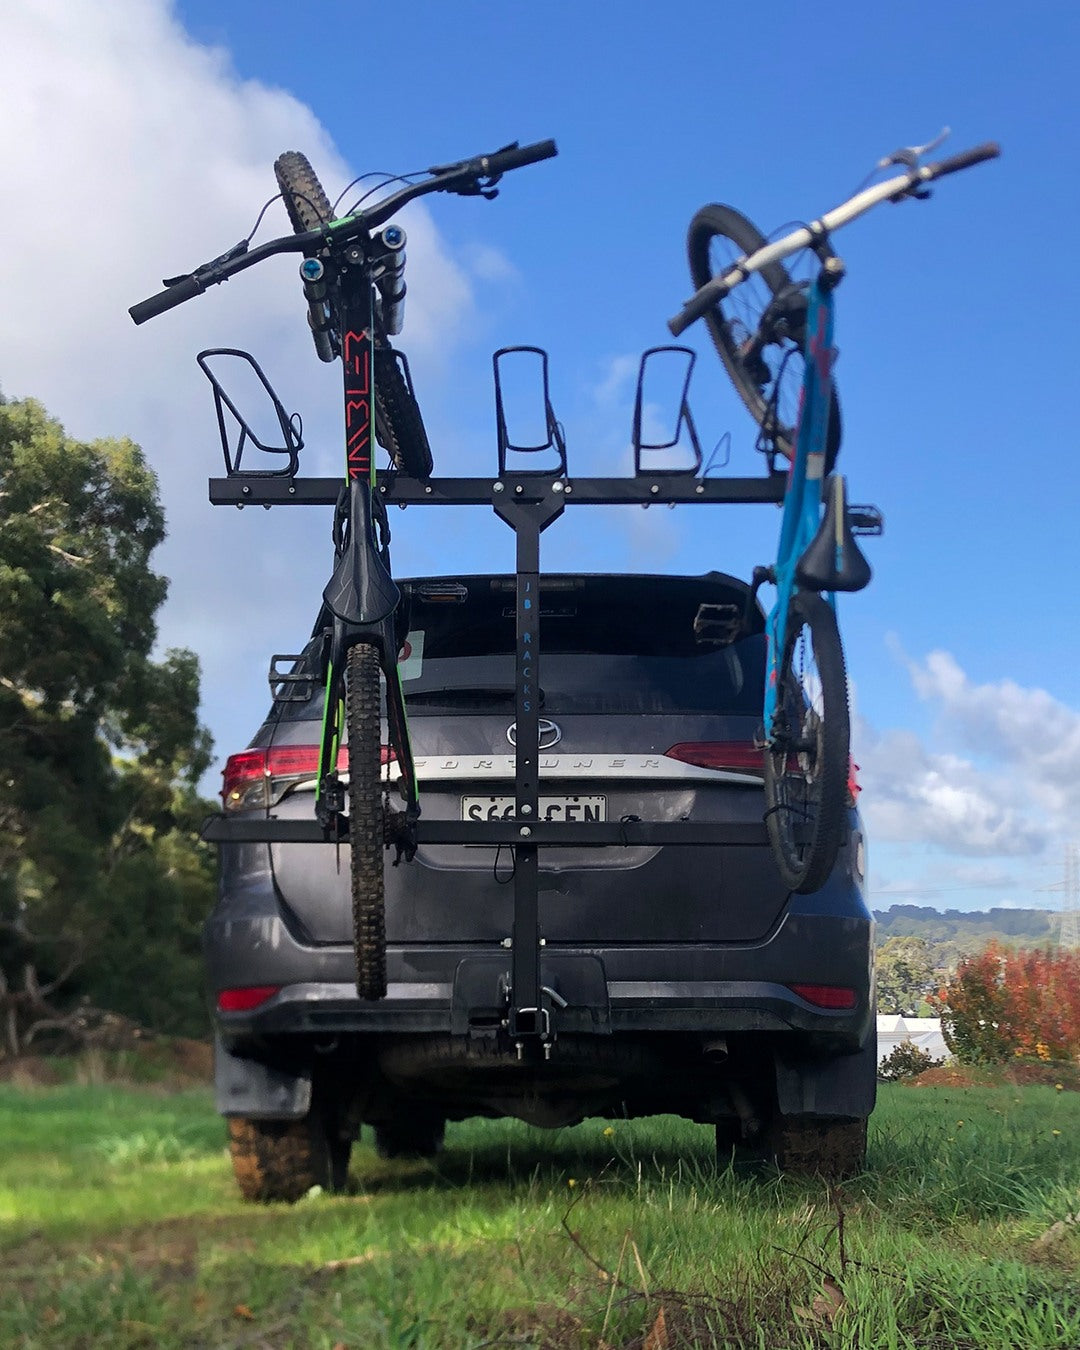 5 Bike Rack (Vertical)